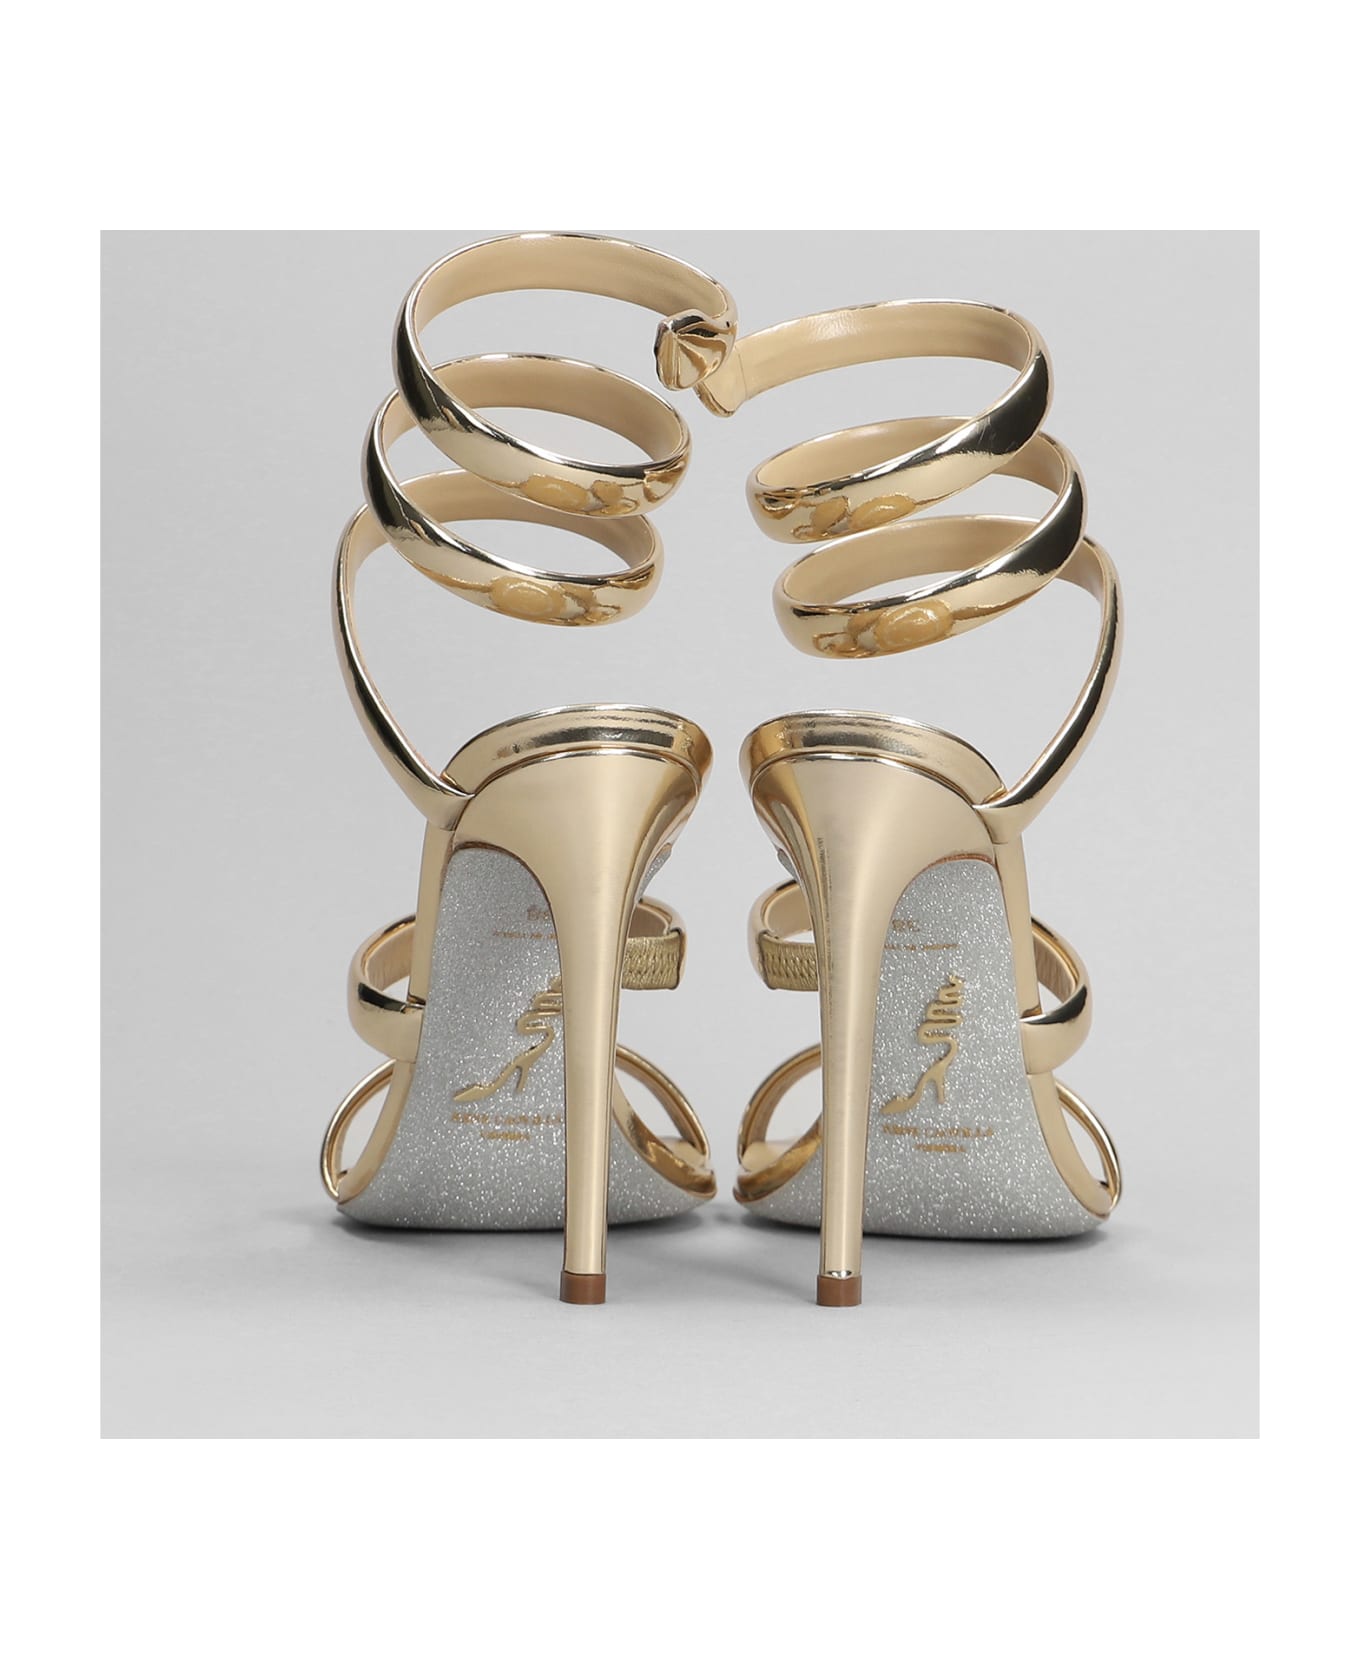 René Caovilla Serpente Sandals In Gold Leather - gold